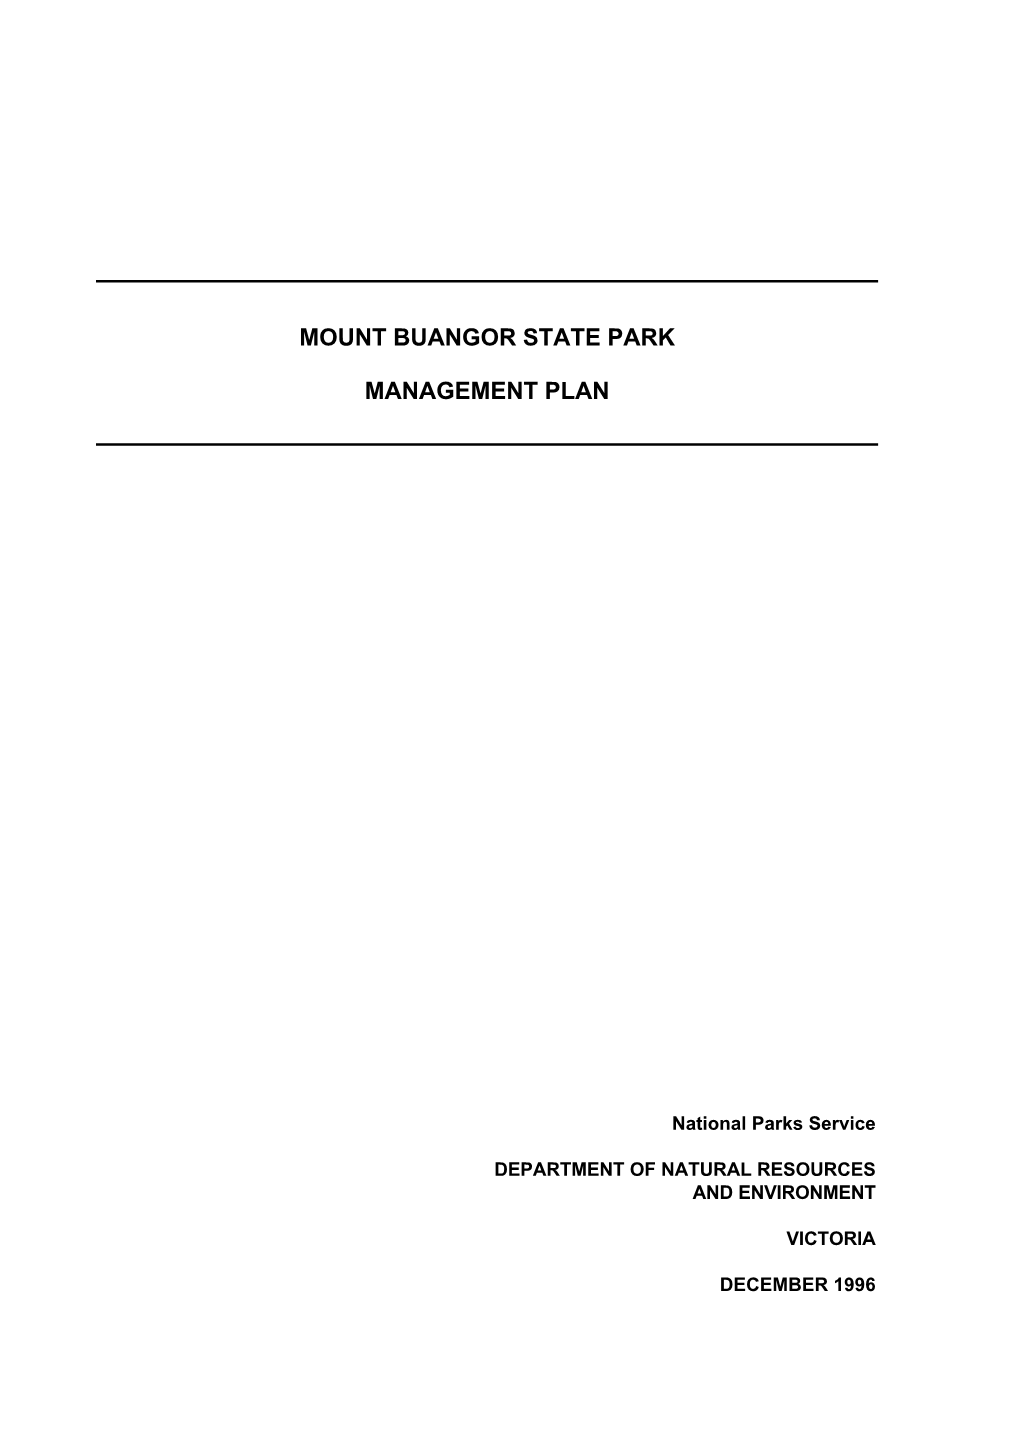 Mount Buangor State Park Management Plan